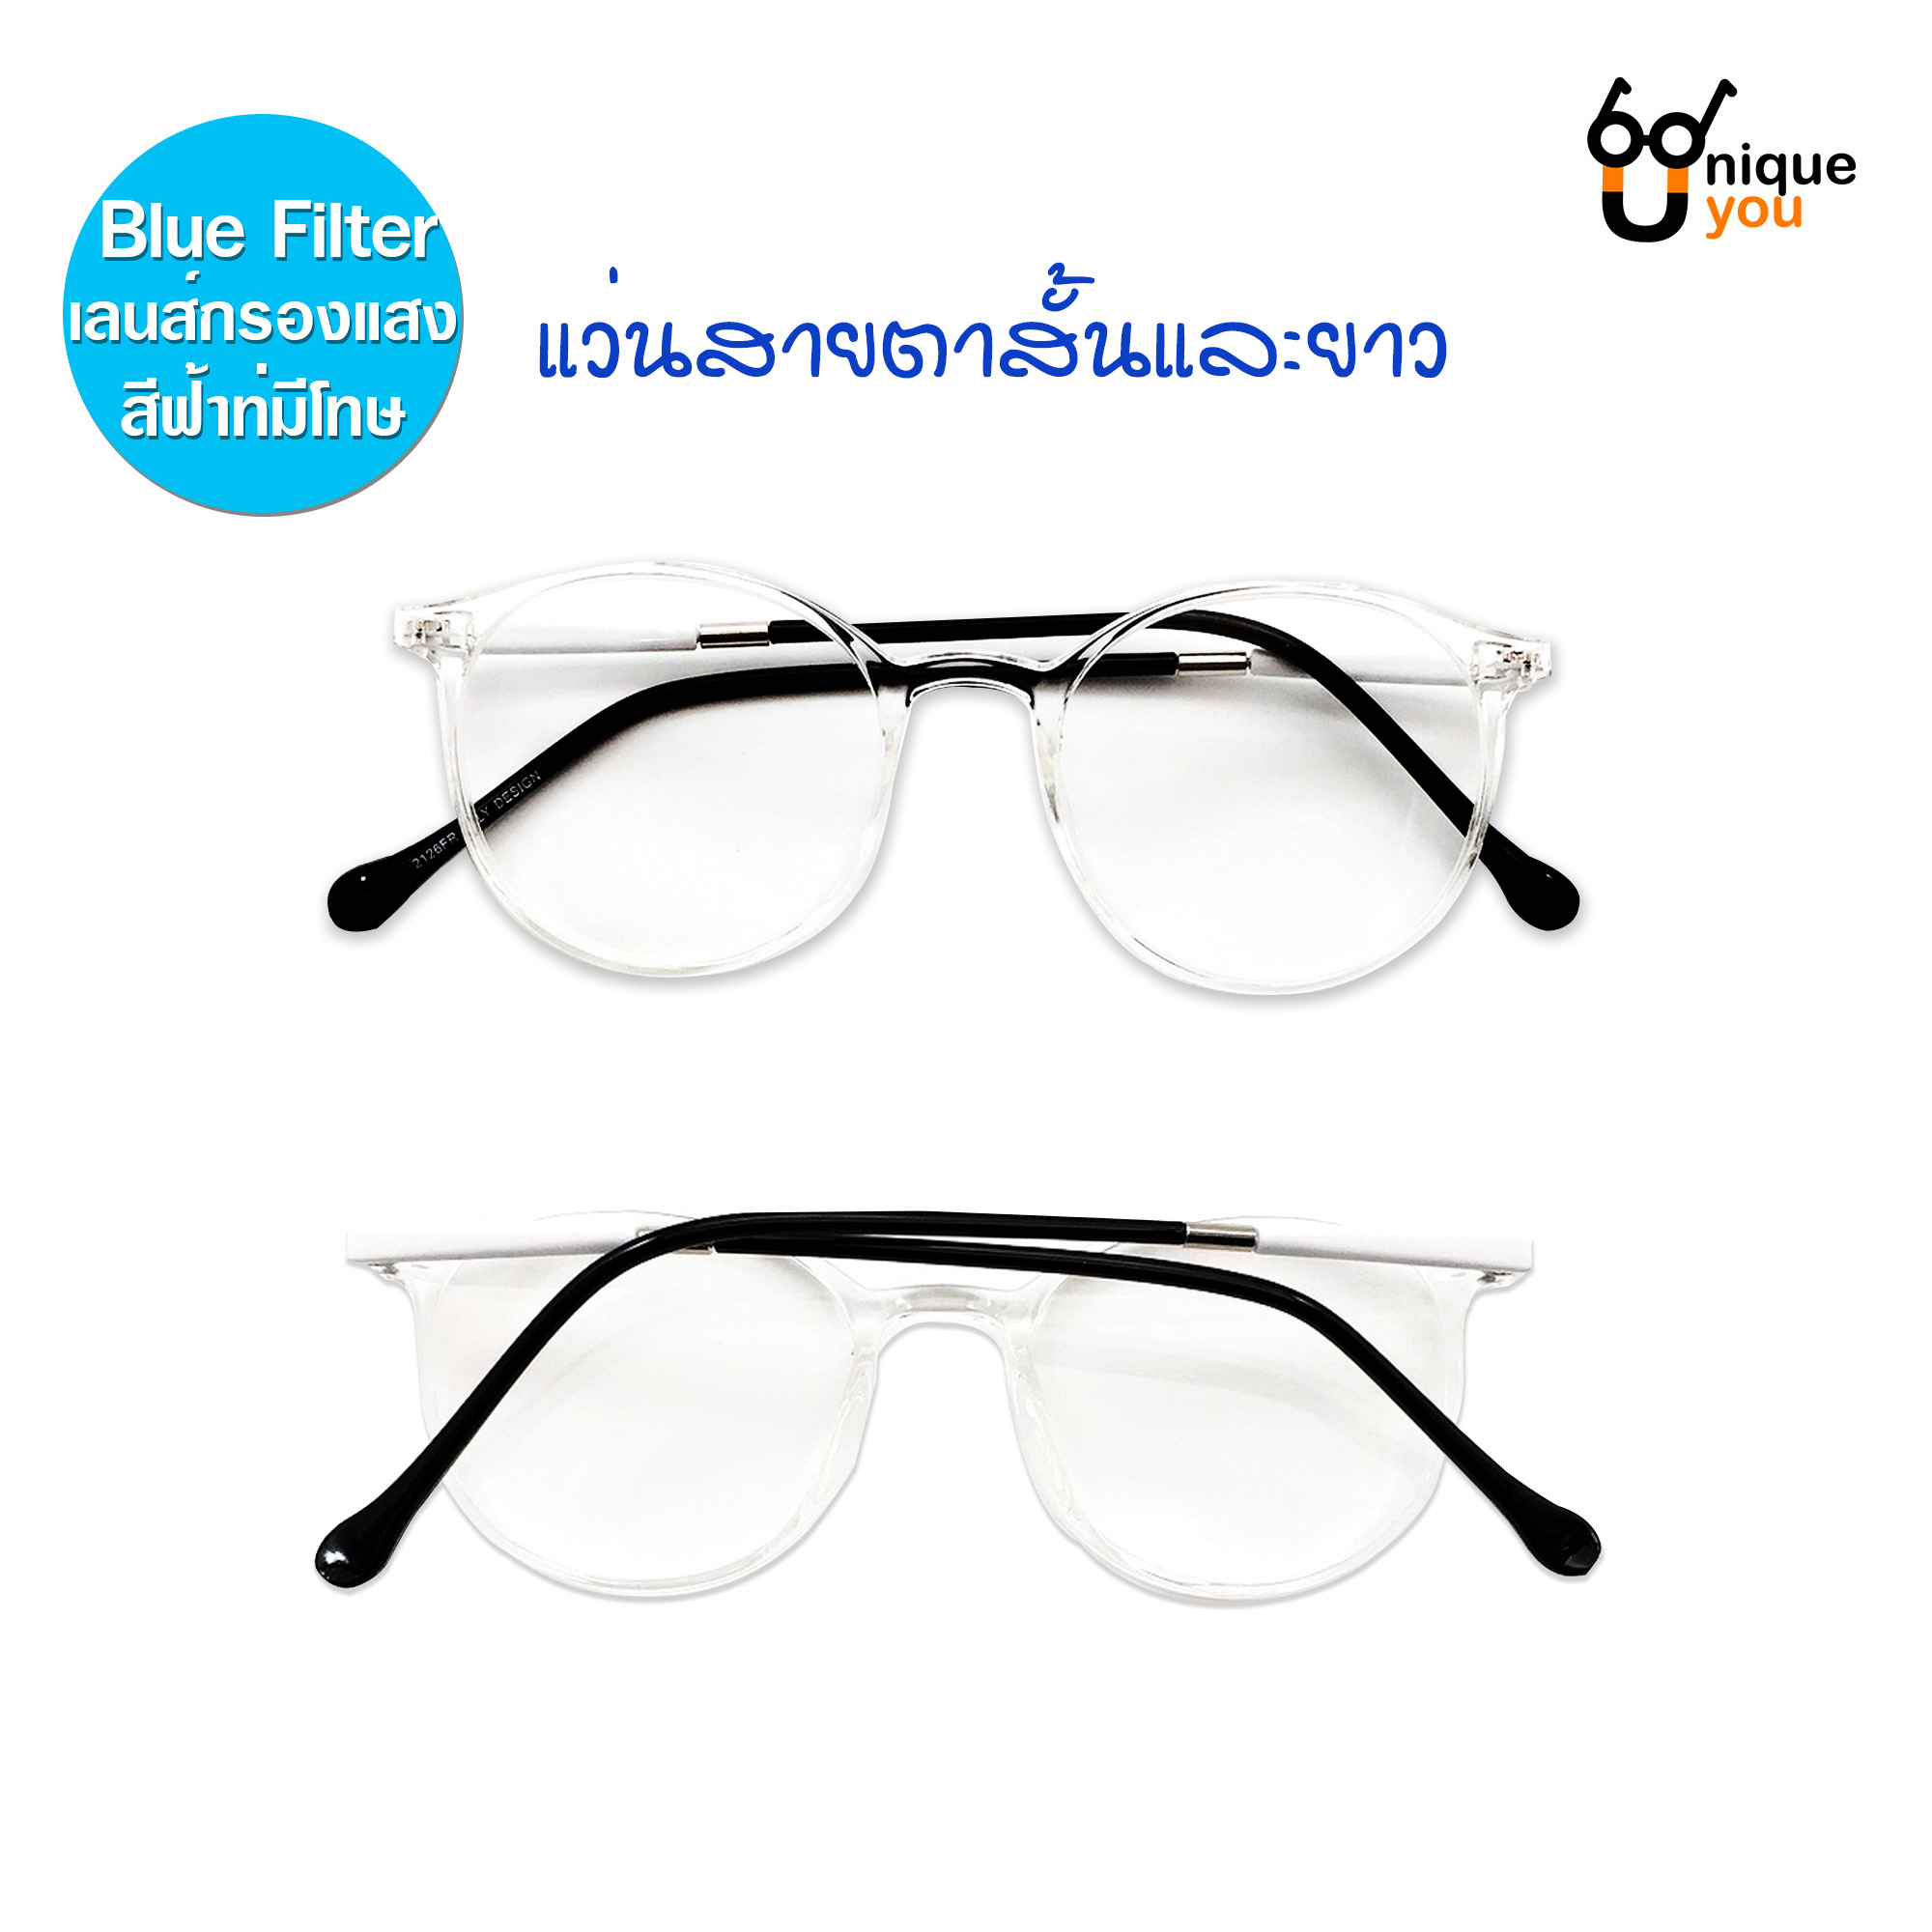 Uniqueyou แว่นสายตาสั้นและสายตายาว เลนสิ์Blue filter แว่นตากรองแสงสีฟ้าที่มีโทษ พร้อมผ้าเช็ดแว่นและถุงผ้าใส่แว่น